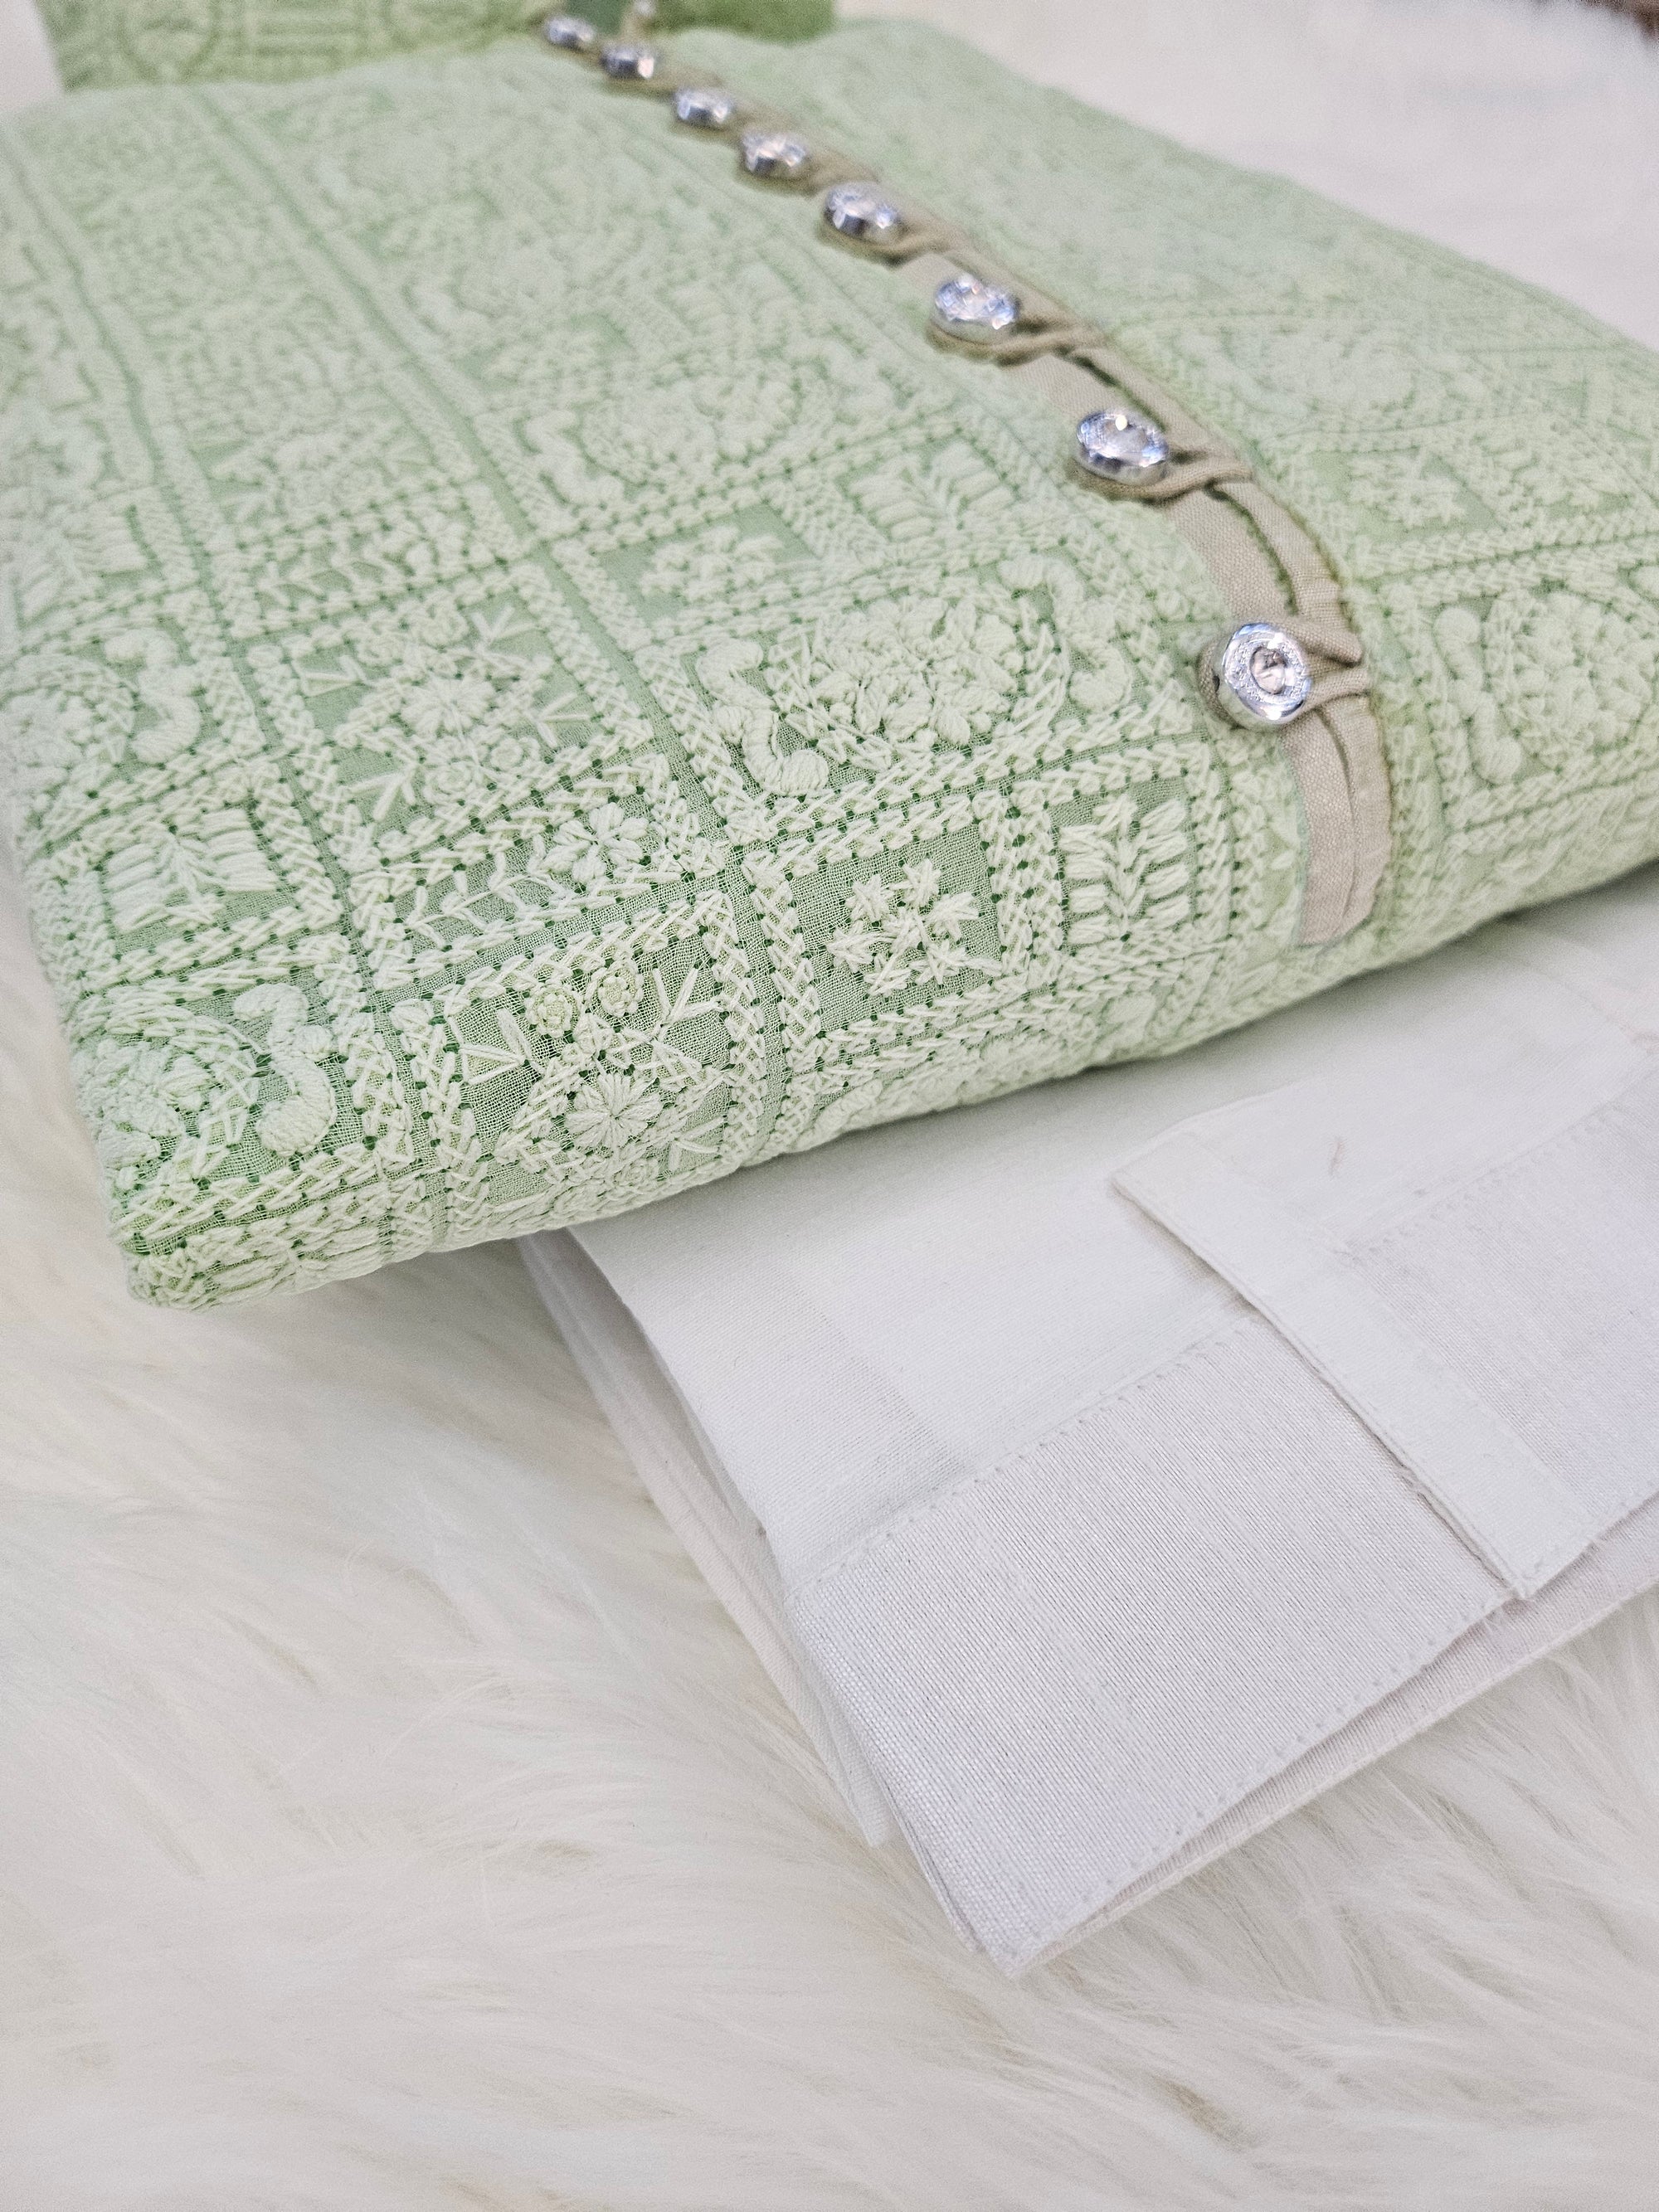 Light Green Shade Georgette with Intricate Chikankari Embroidery Kurta Pajama Set, KP - 1237